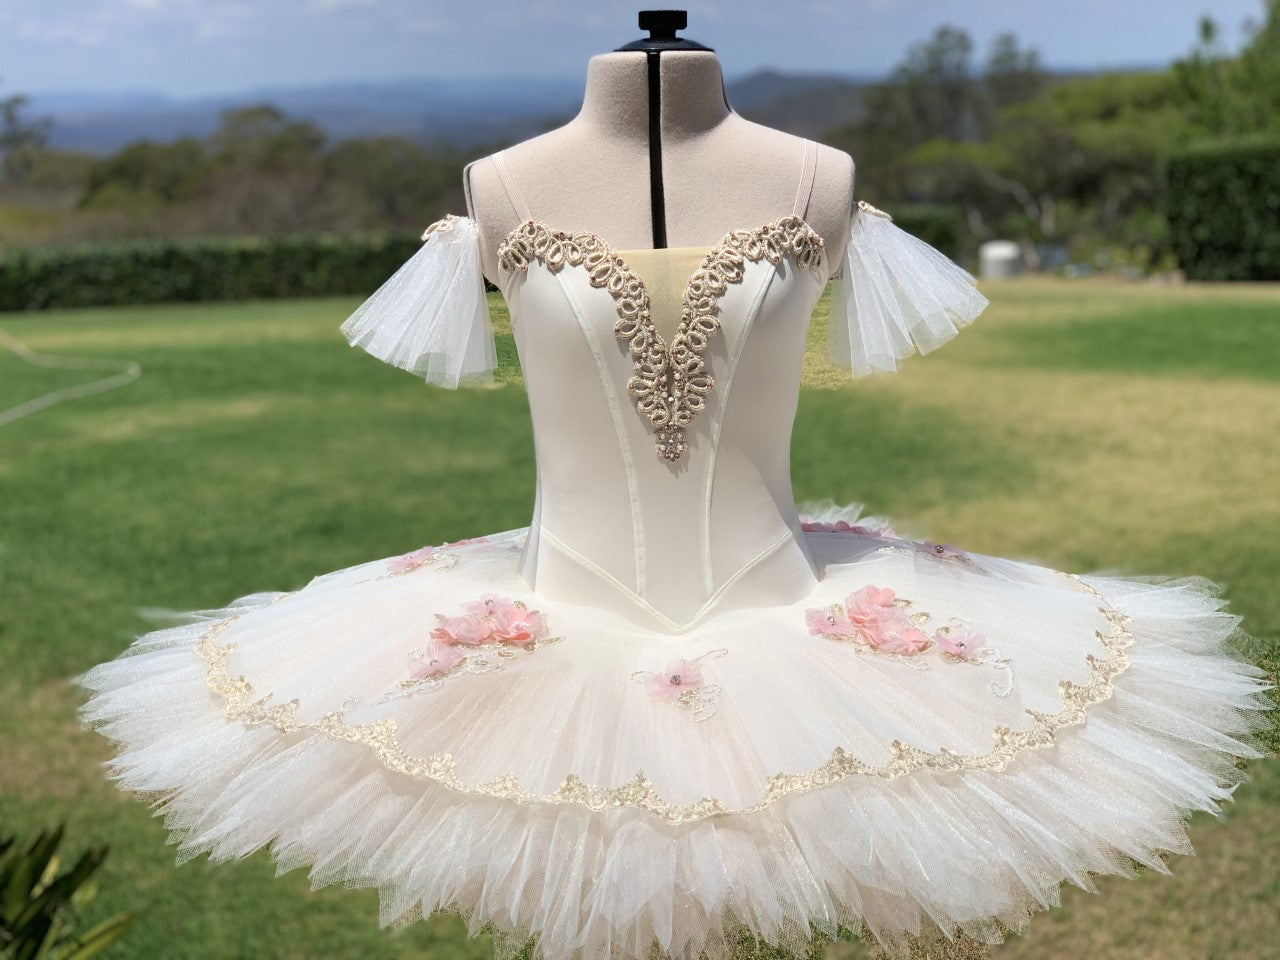 Sugar Fairy - Dancewear by Patricia